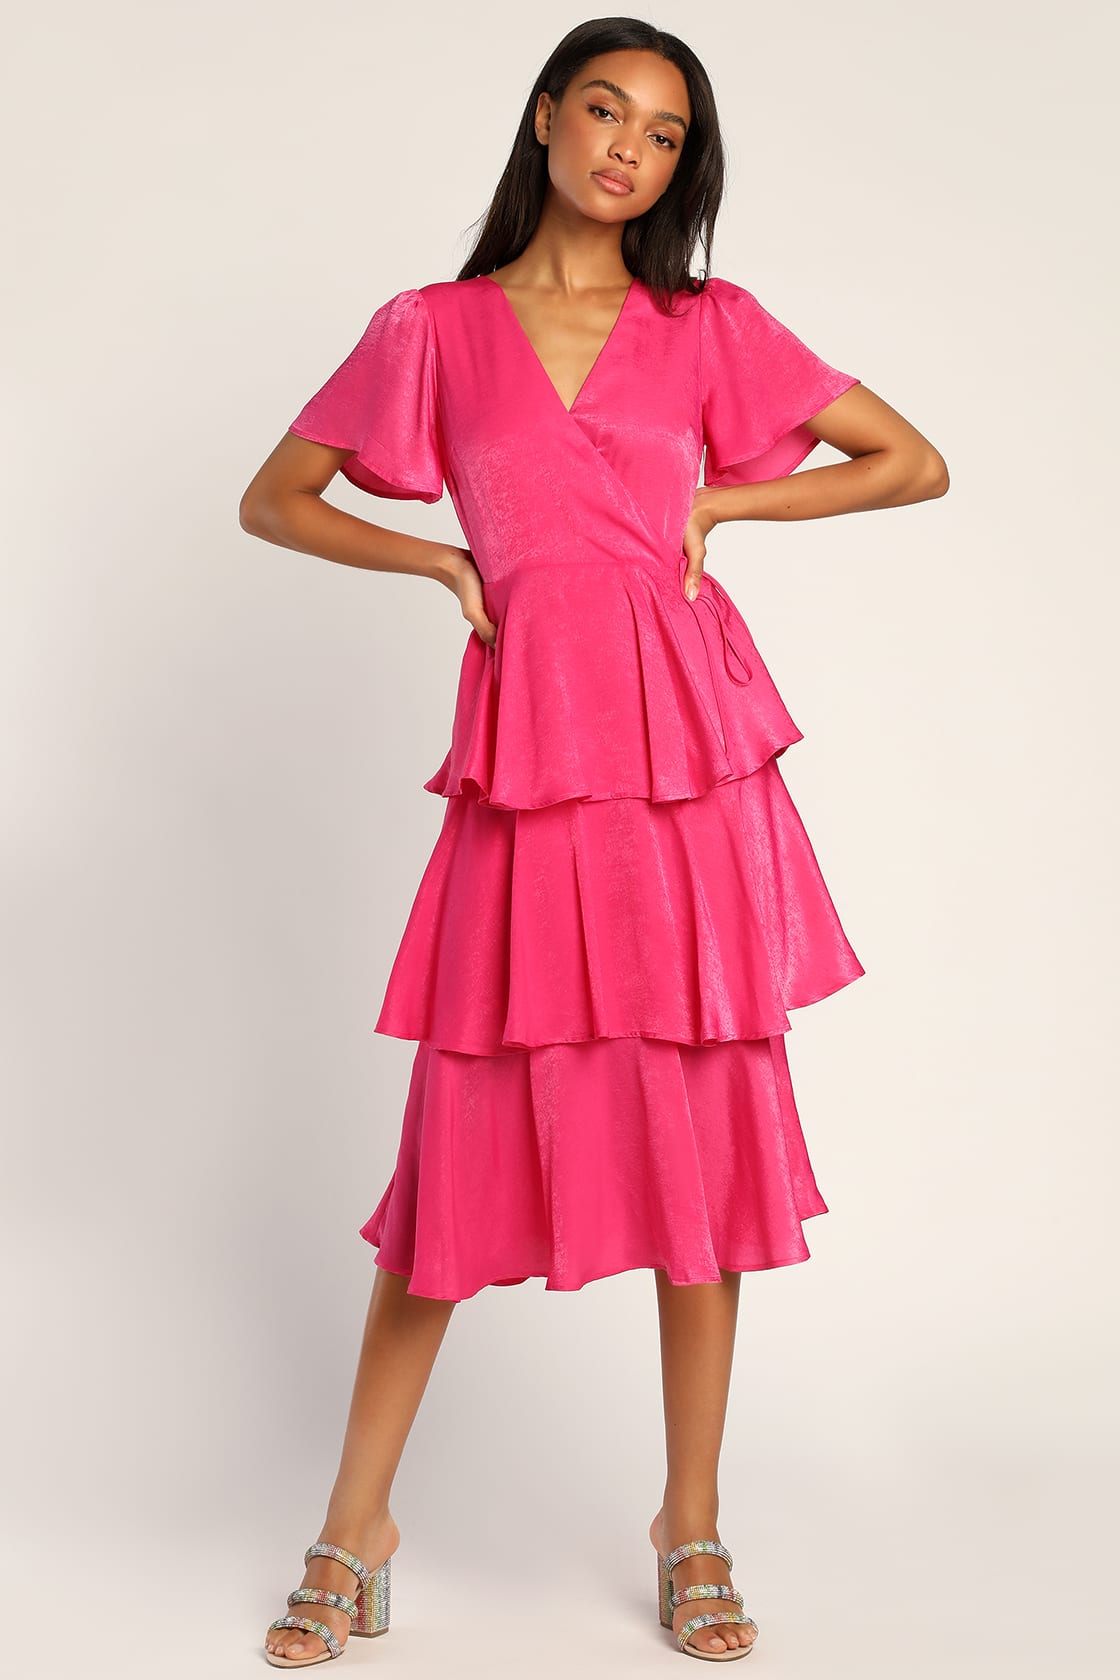 Hot Pink Tiered Dress - Midi Dress - Surplice Dress - Lulus